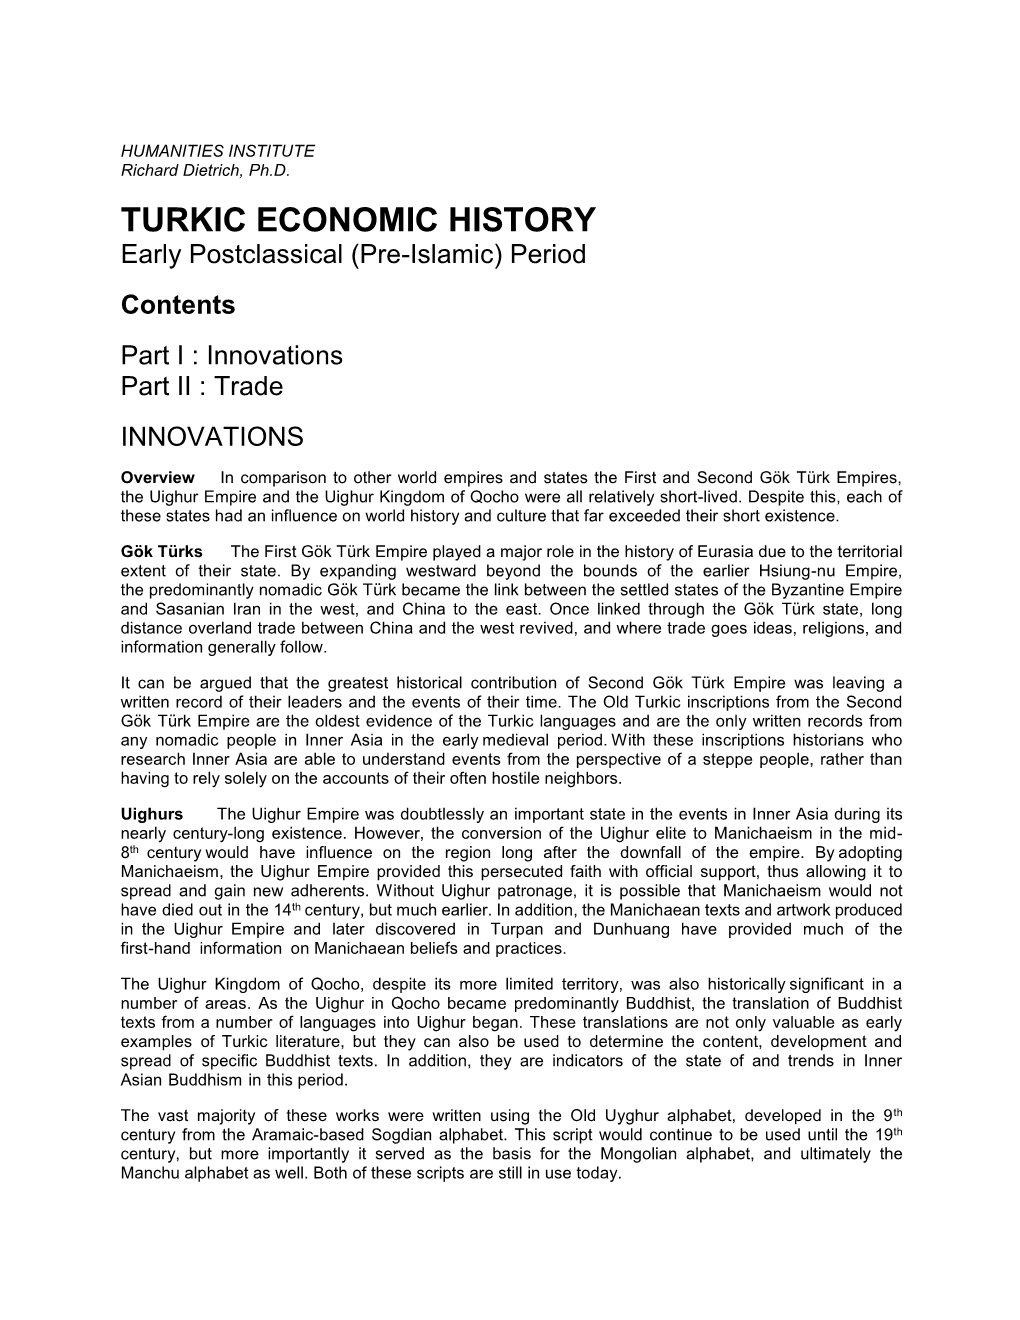 TURKIC ECONOMIC HISTORY Early Postclassical (Pre-Islamic) Period